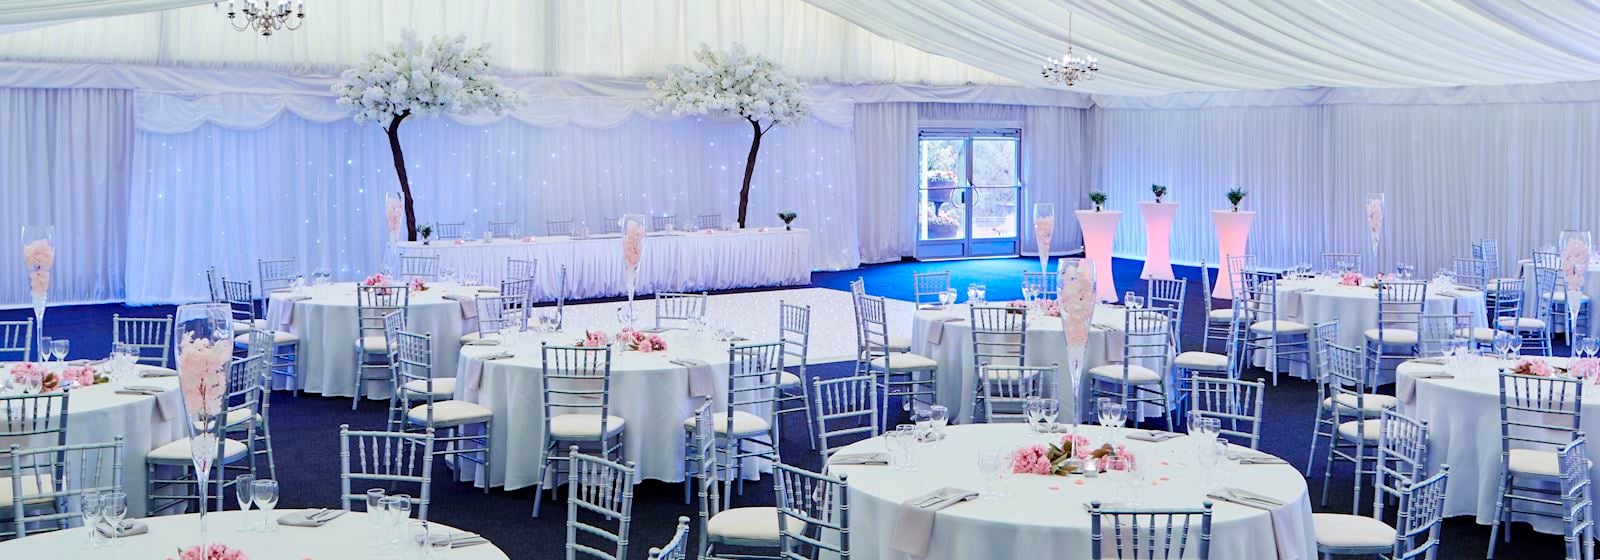 Wedding Party Venues Coventry Birmingham